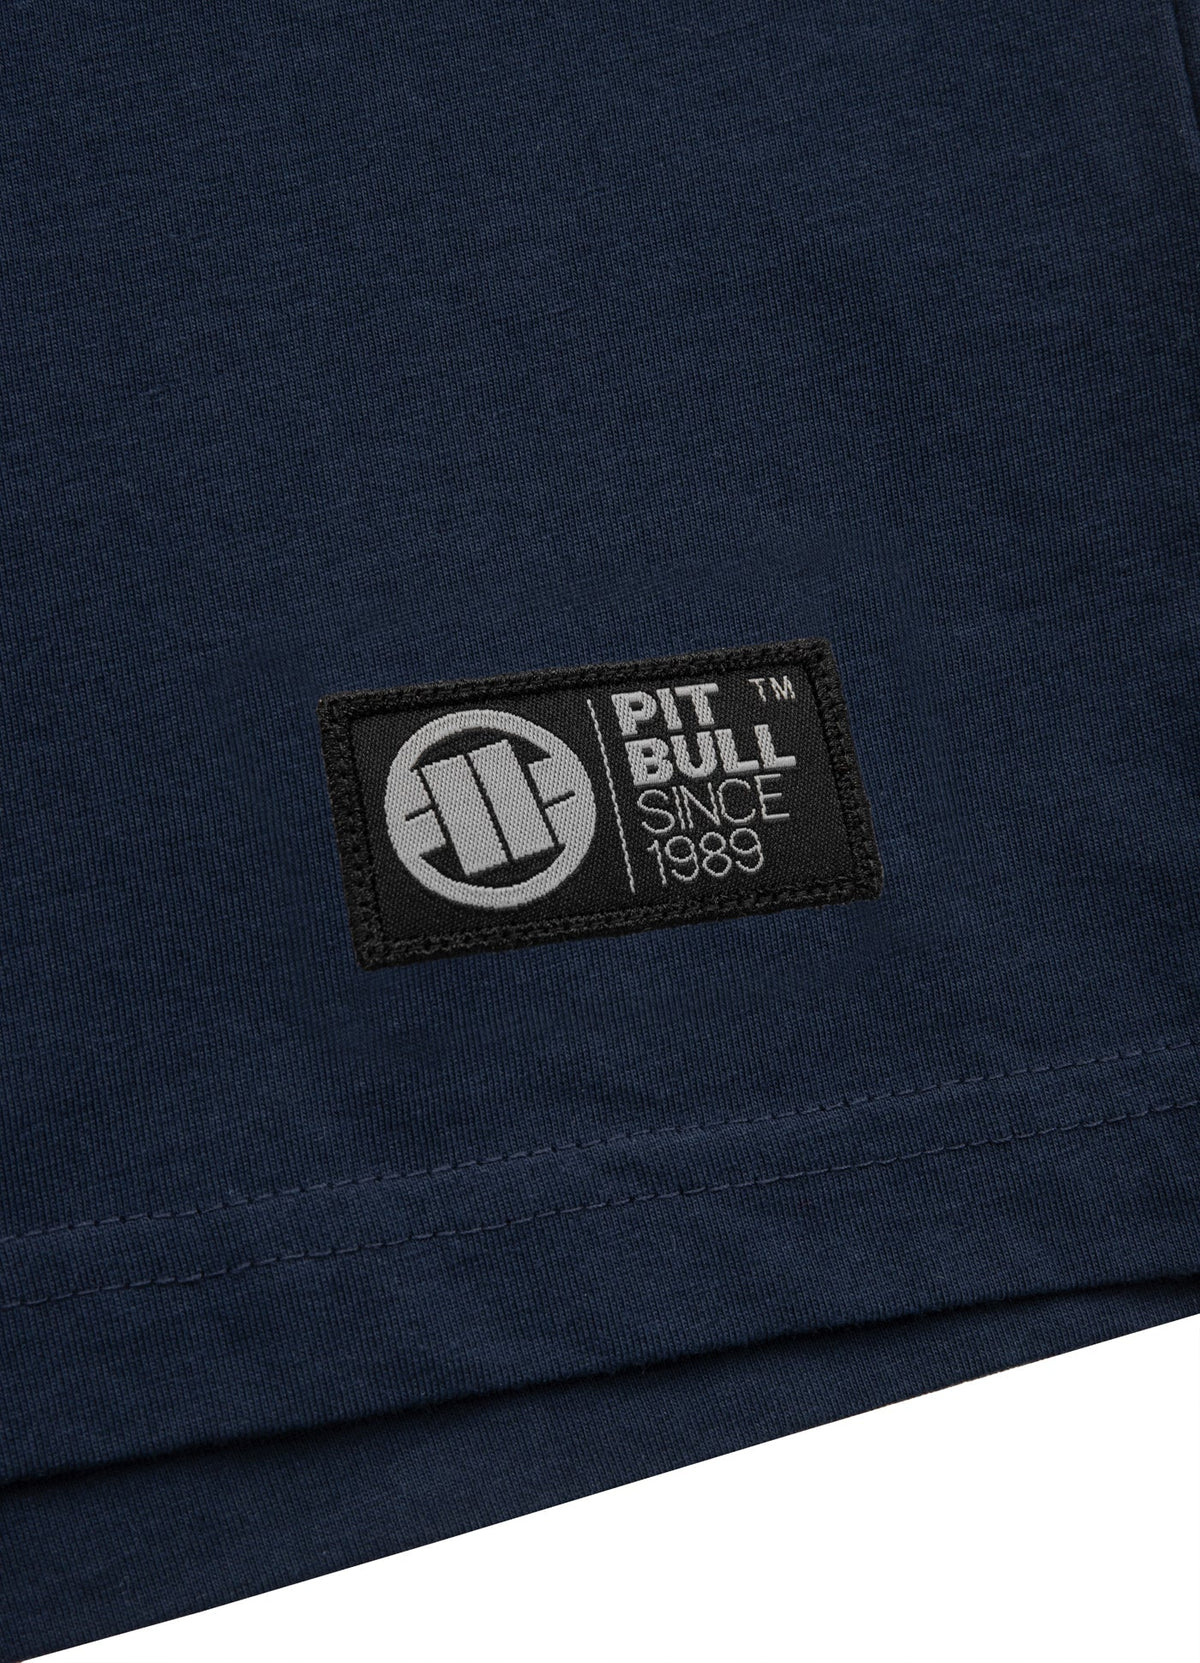 PITBULL USA Lightweight Dark Navy T-shirt